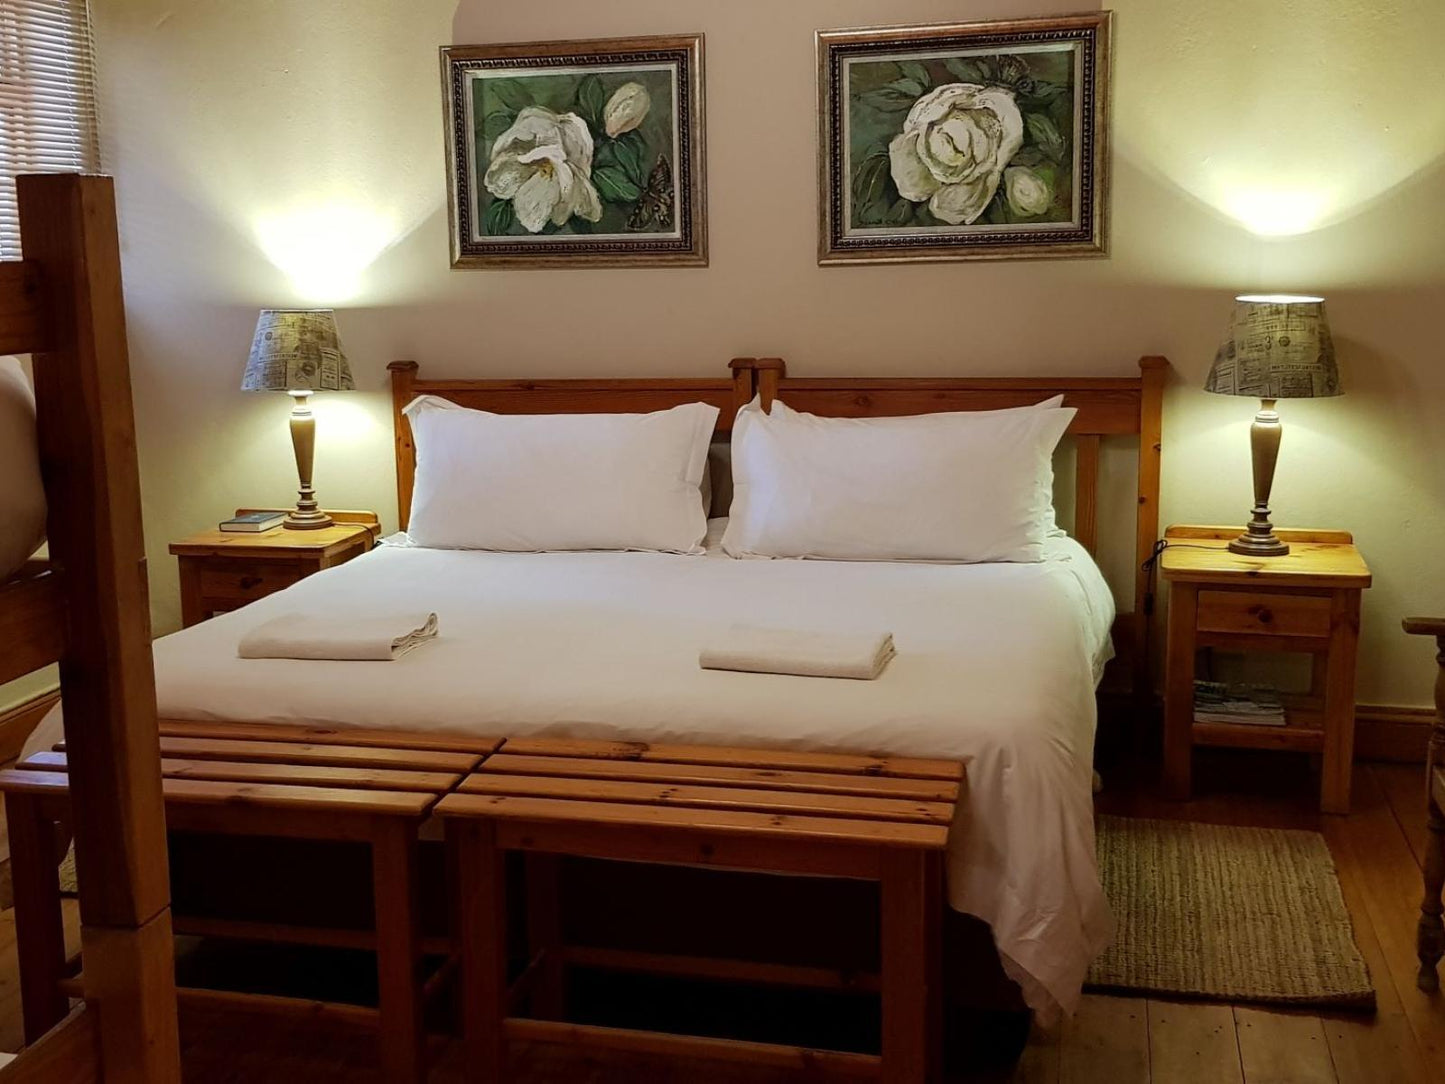 CELTIS One Bedroom Suite @ Celtis Country Lodge